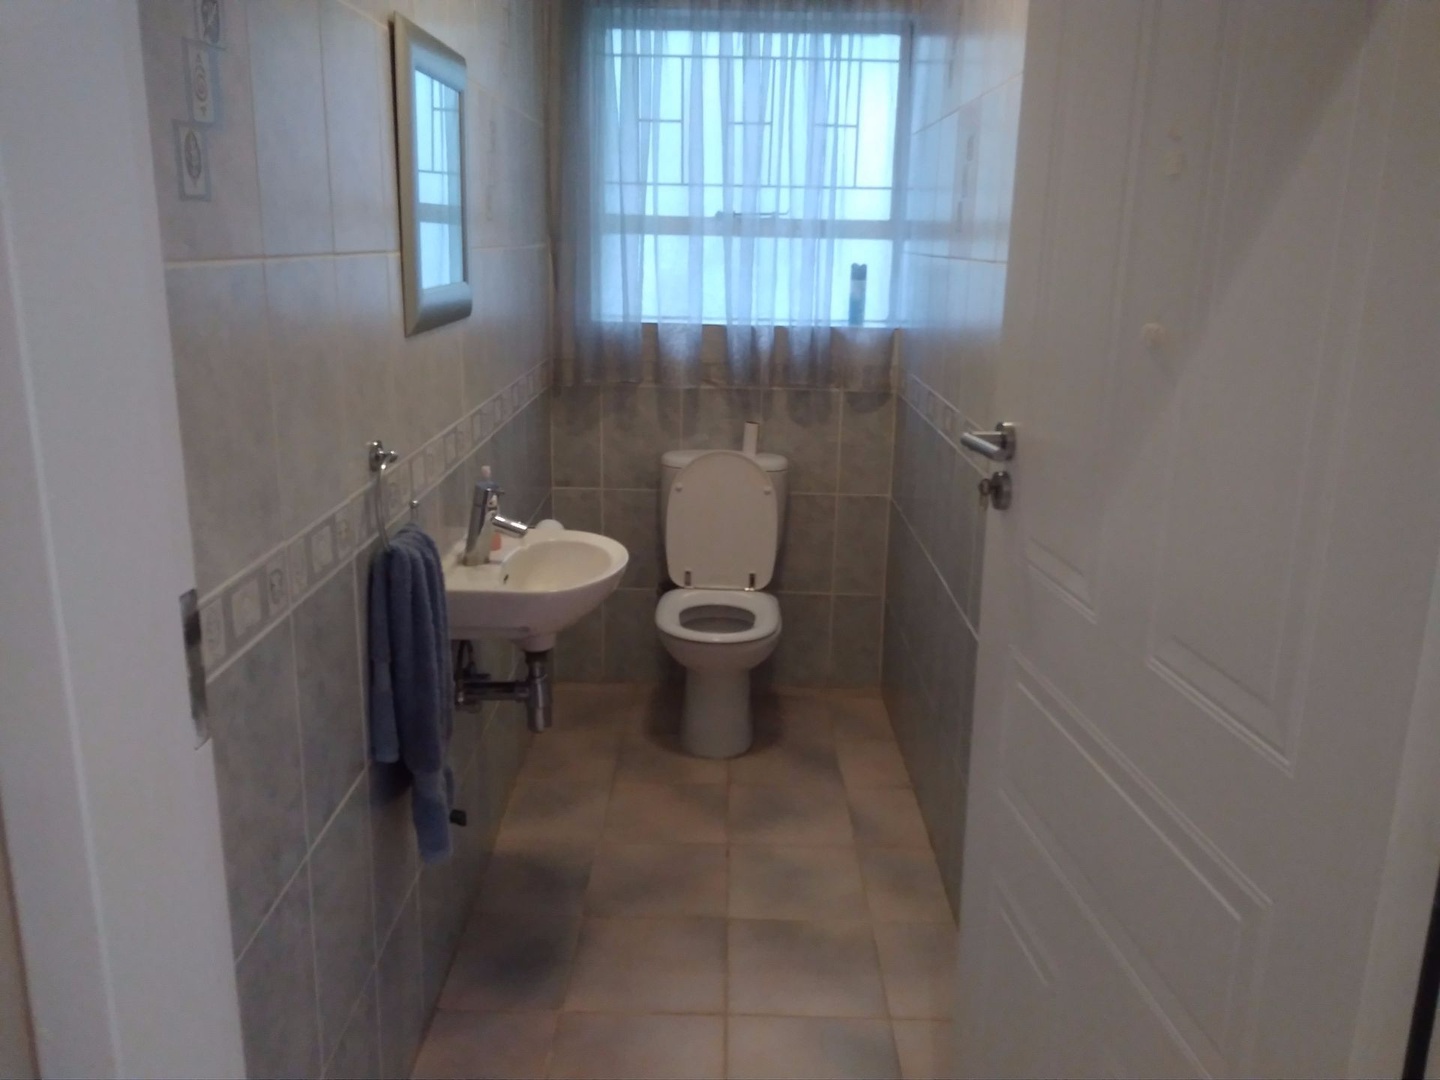 House in Schoemansville - guest toilet